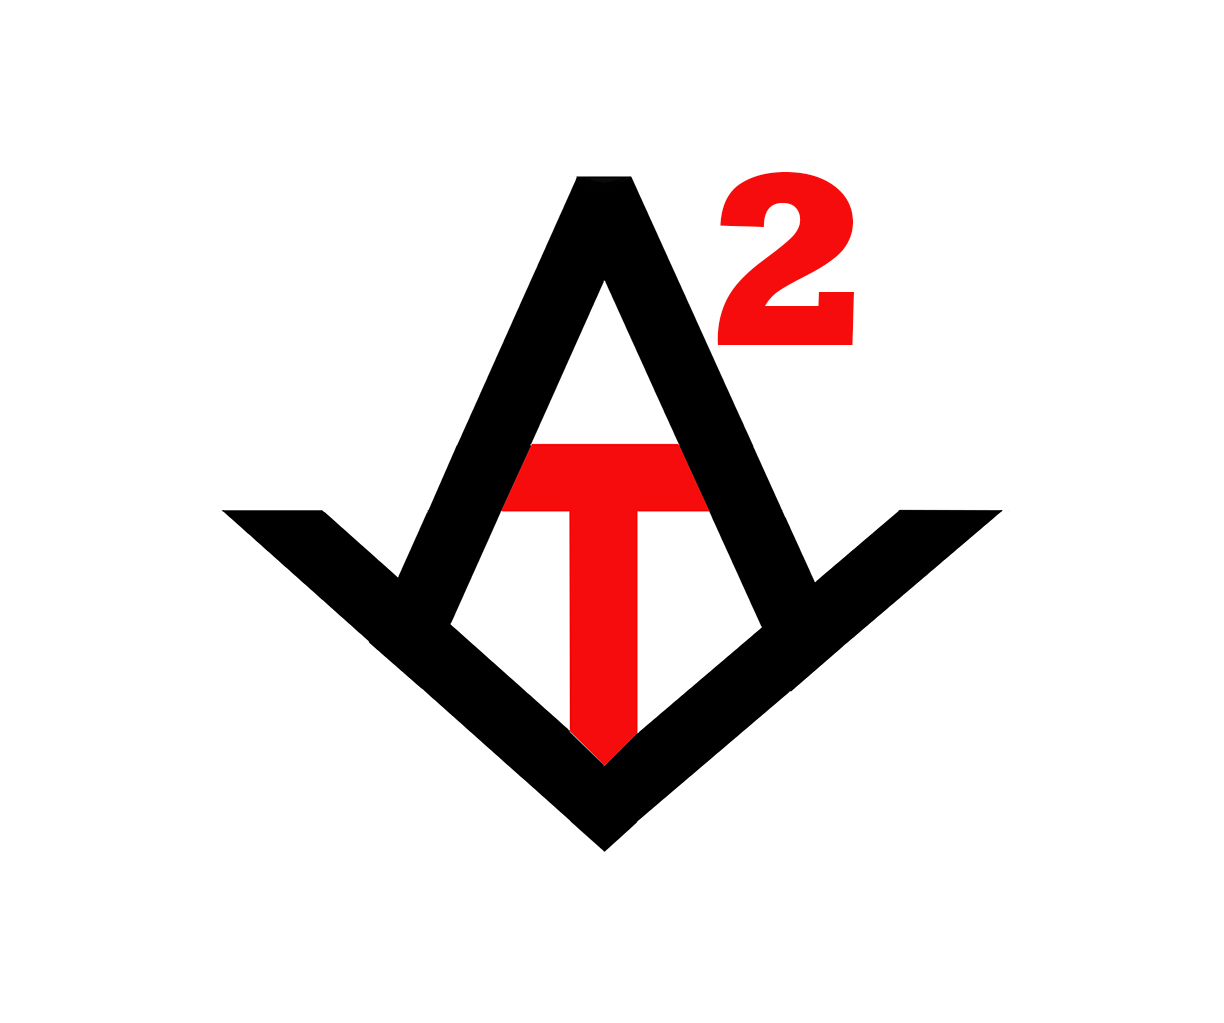 ATV2